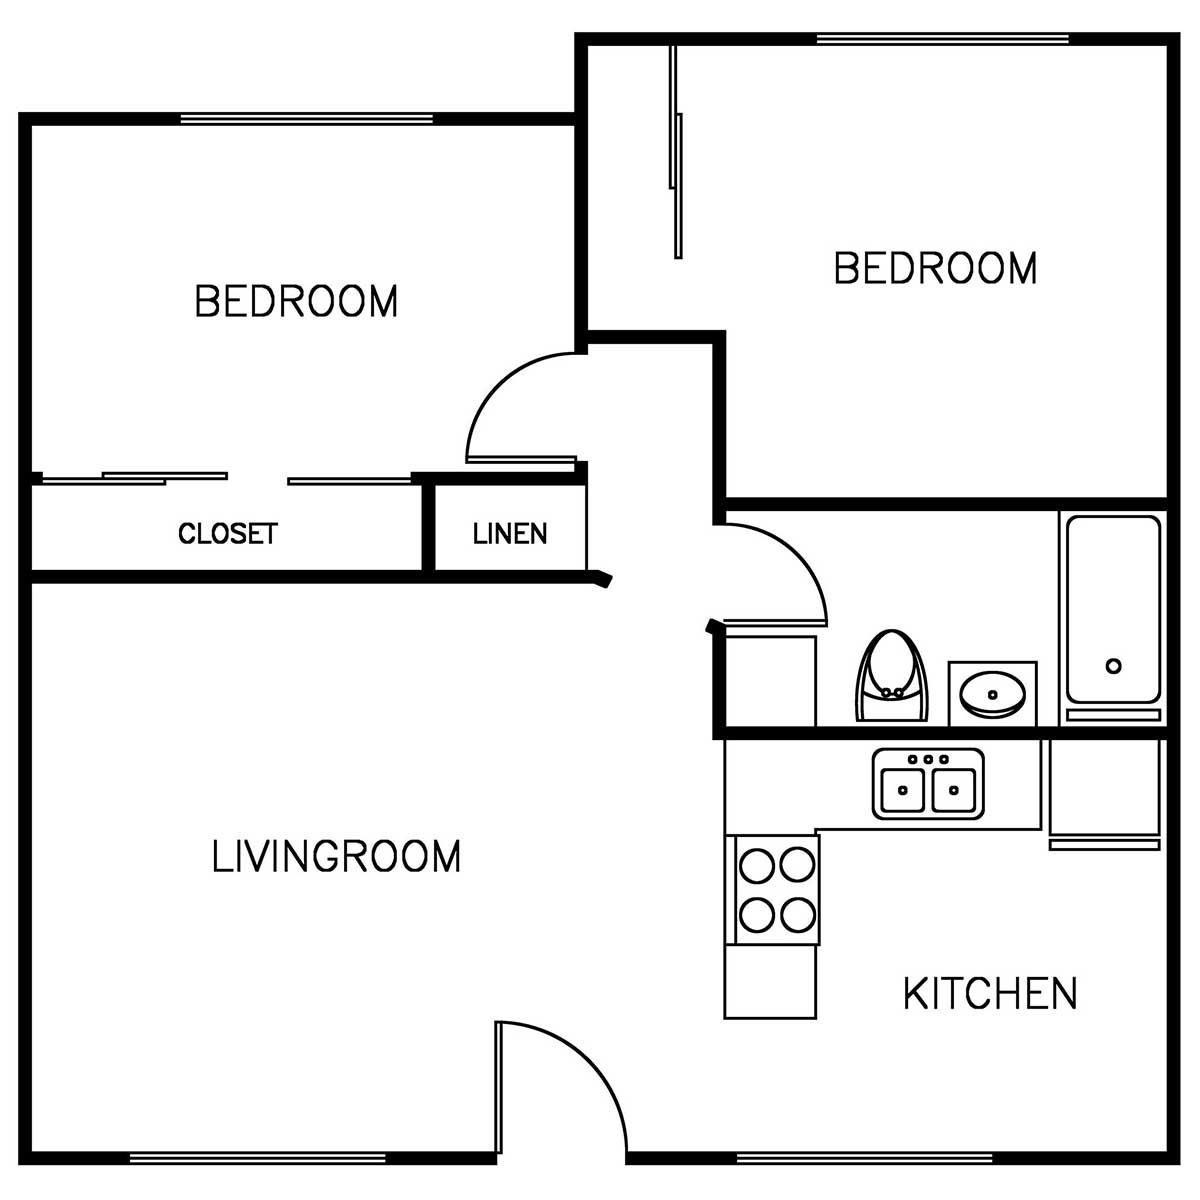 2 bedroom 1 bathroom floor plan layout